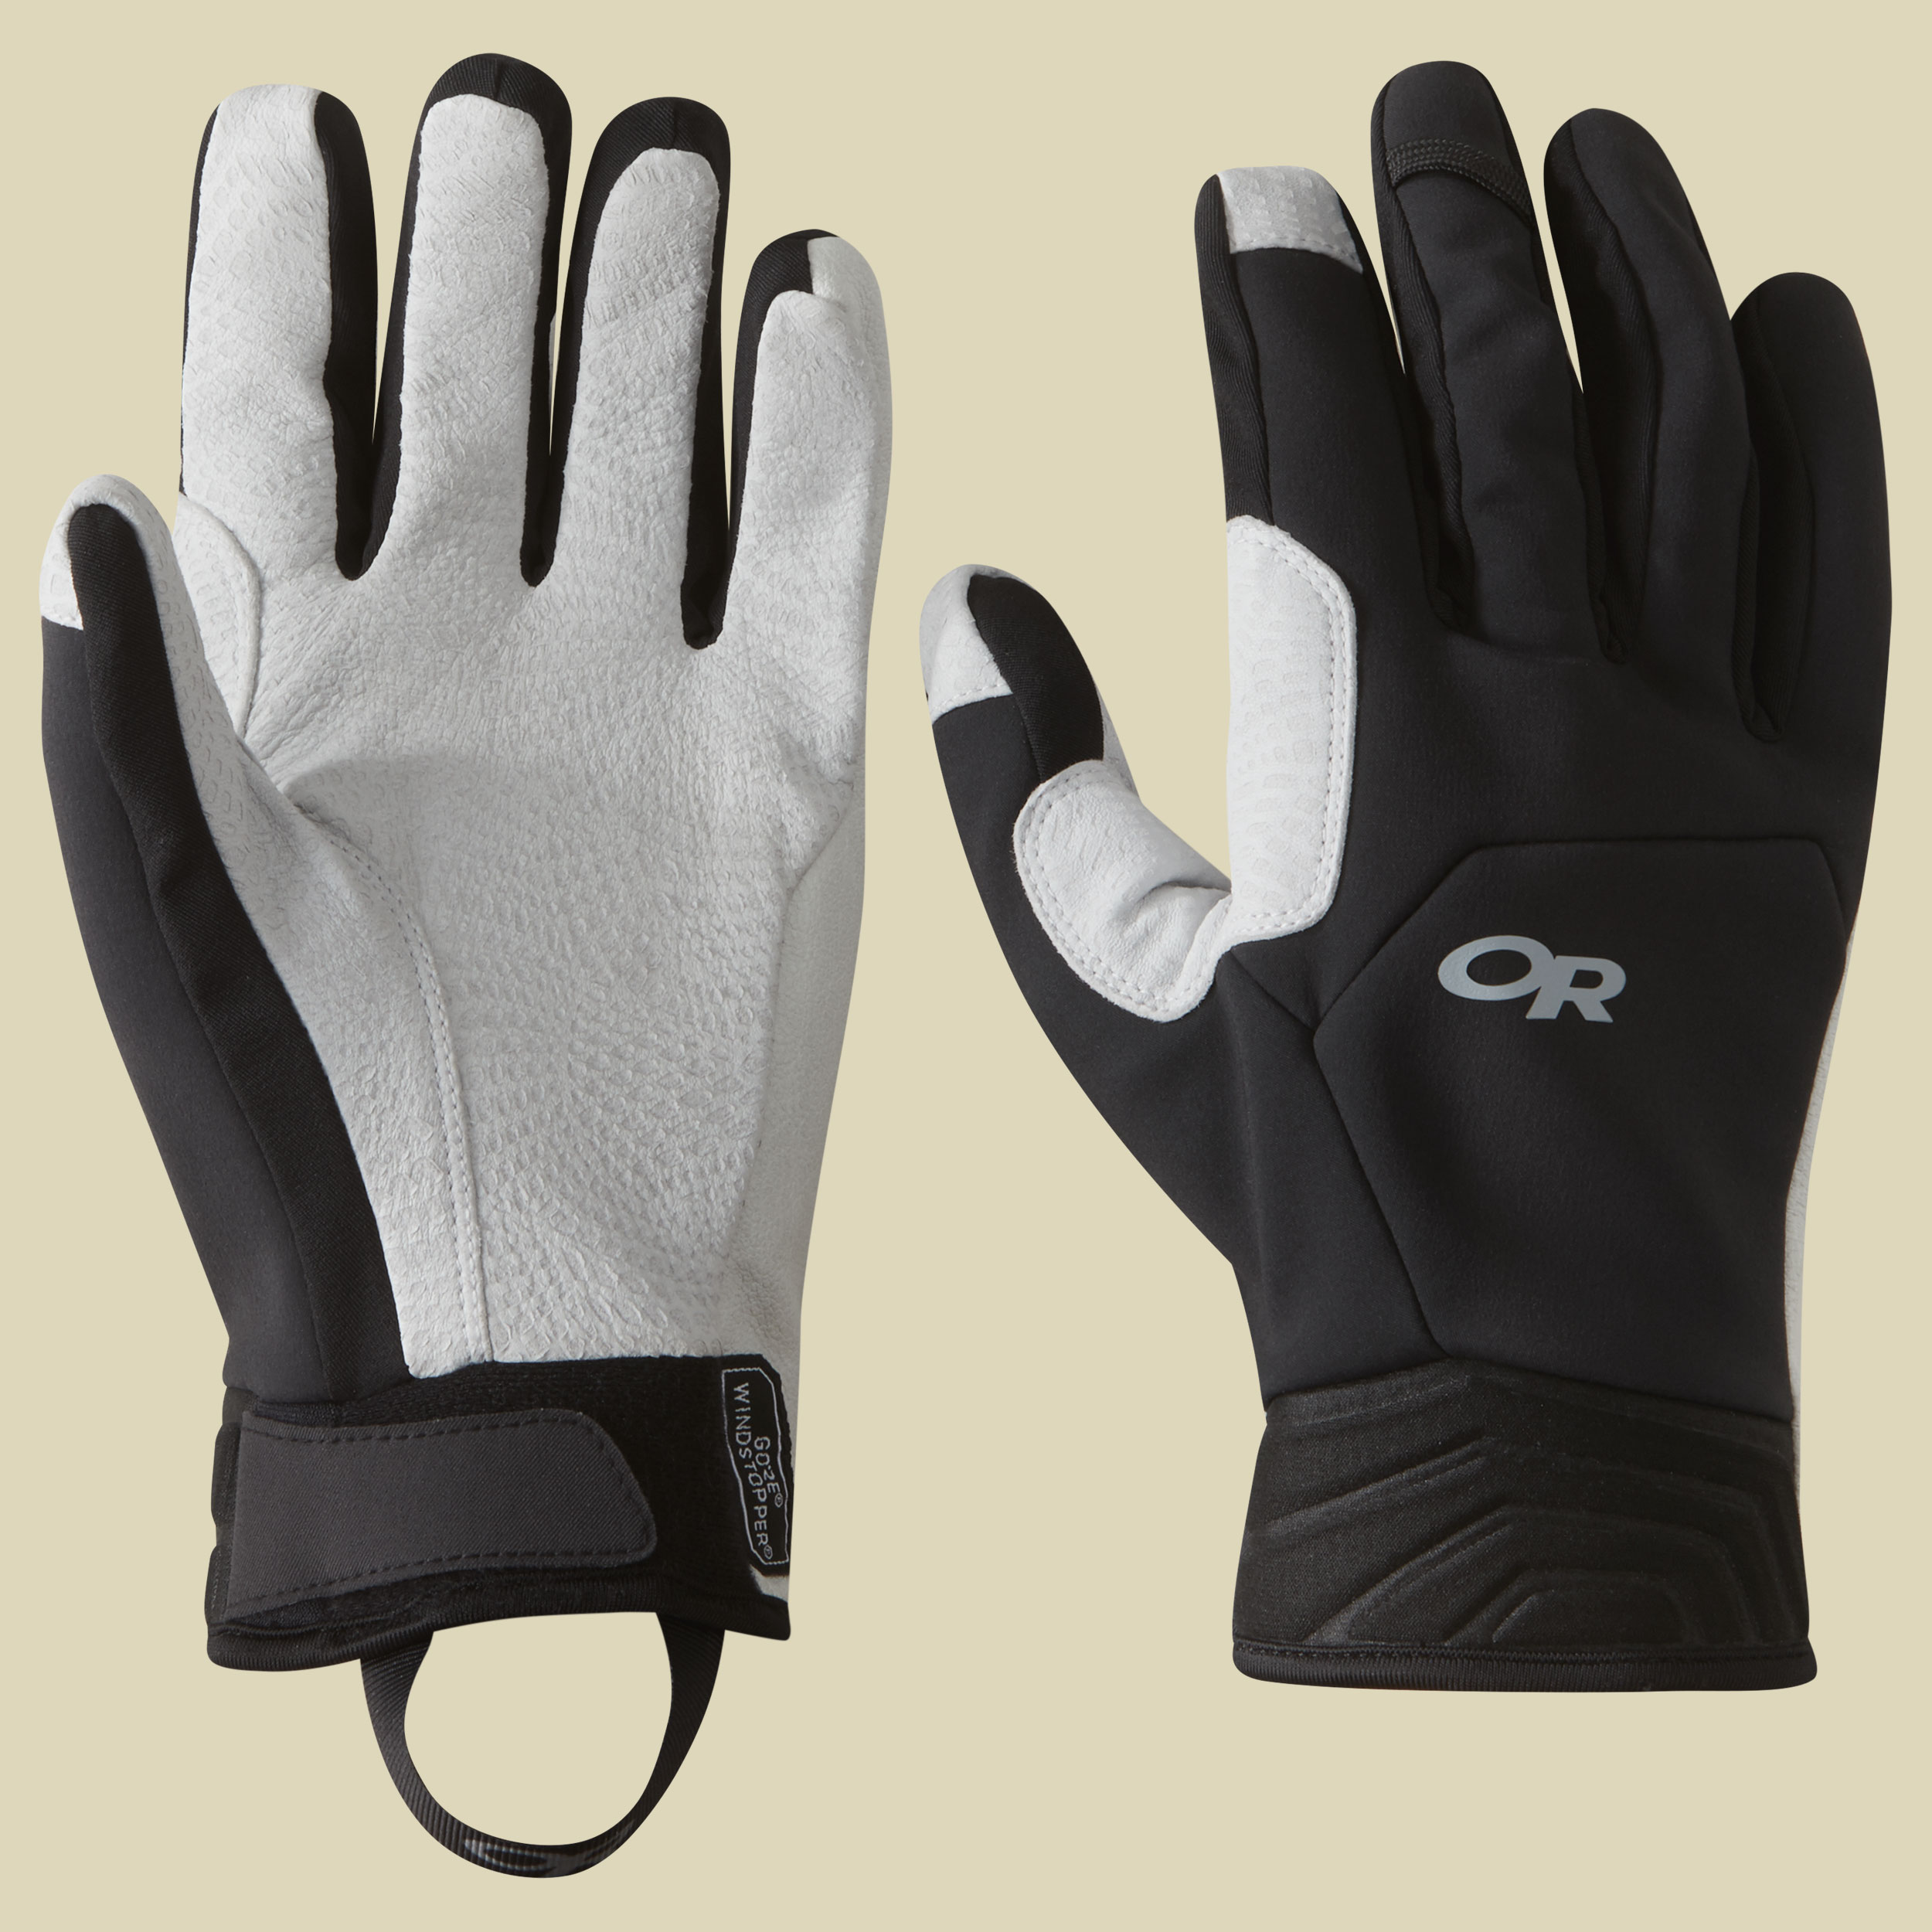 Mixalot Gloves Größe M Farbe black/alloy